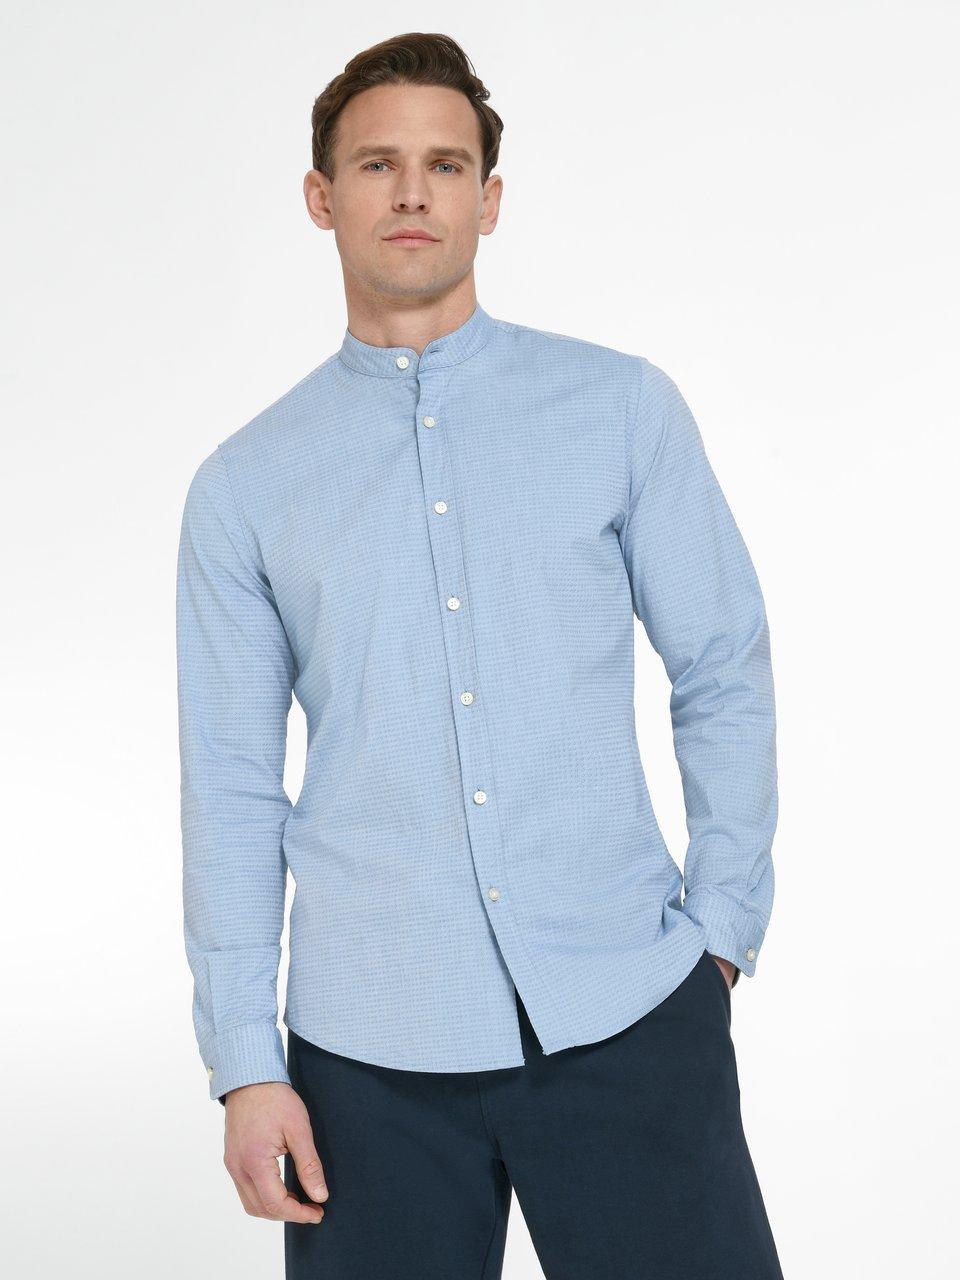 shirts Blue Peter Hahn at Men\'s